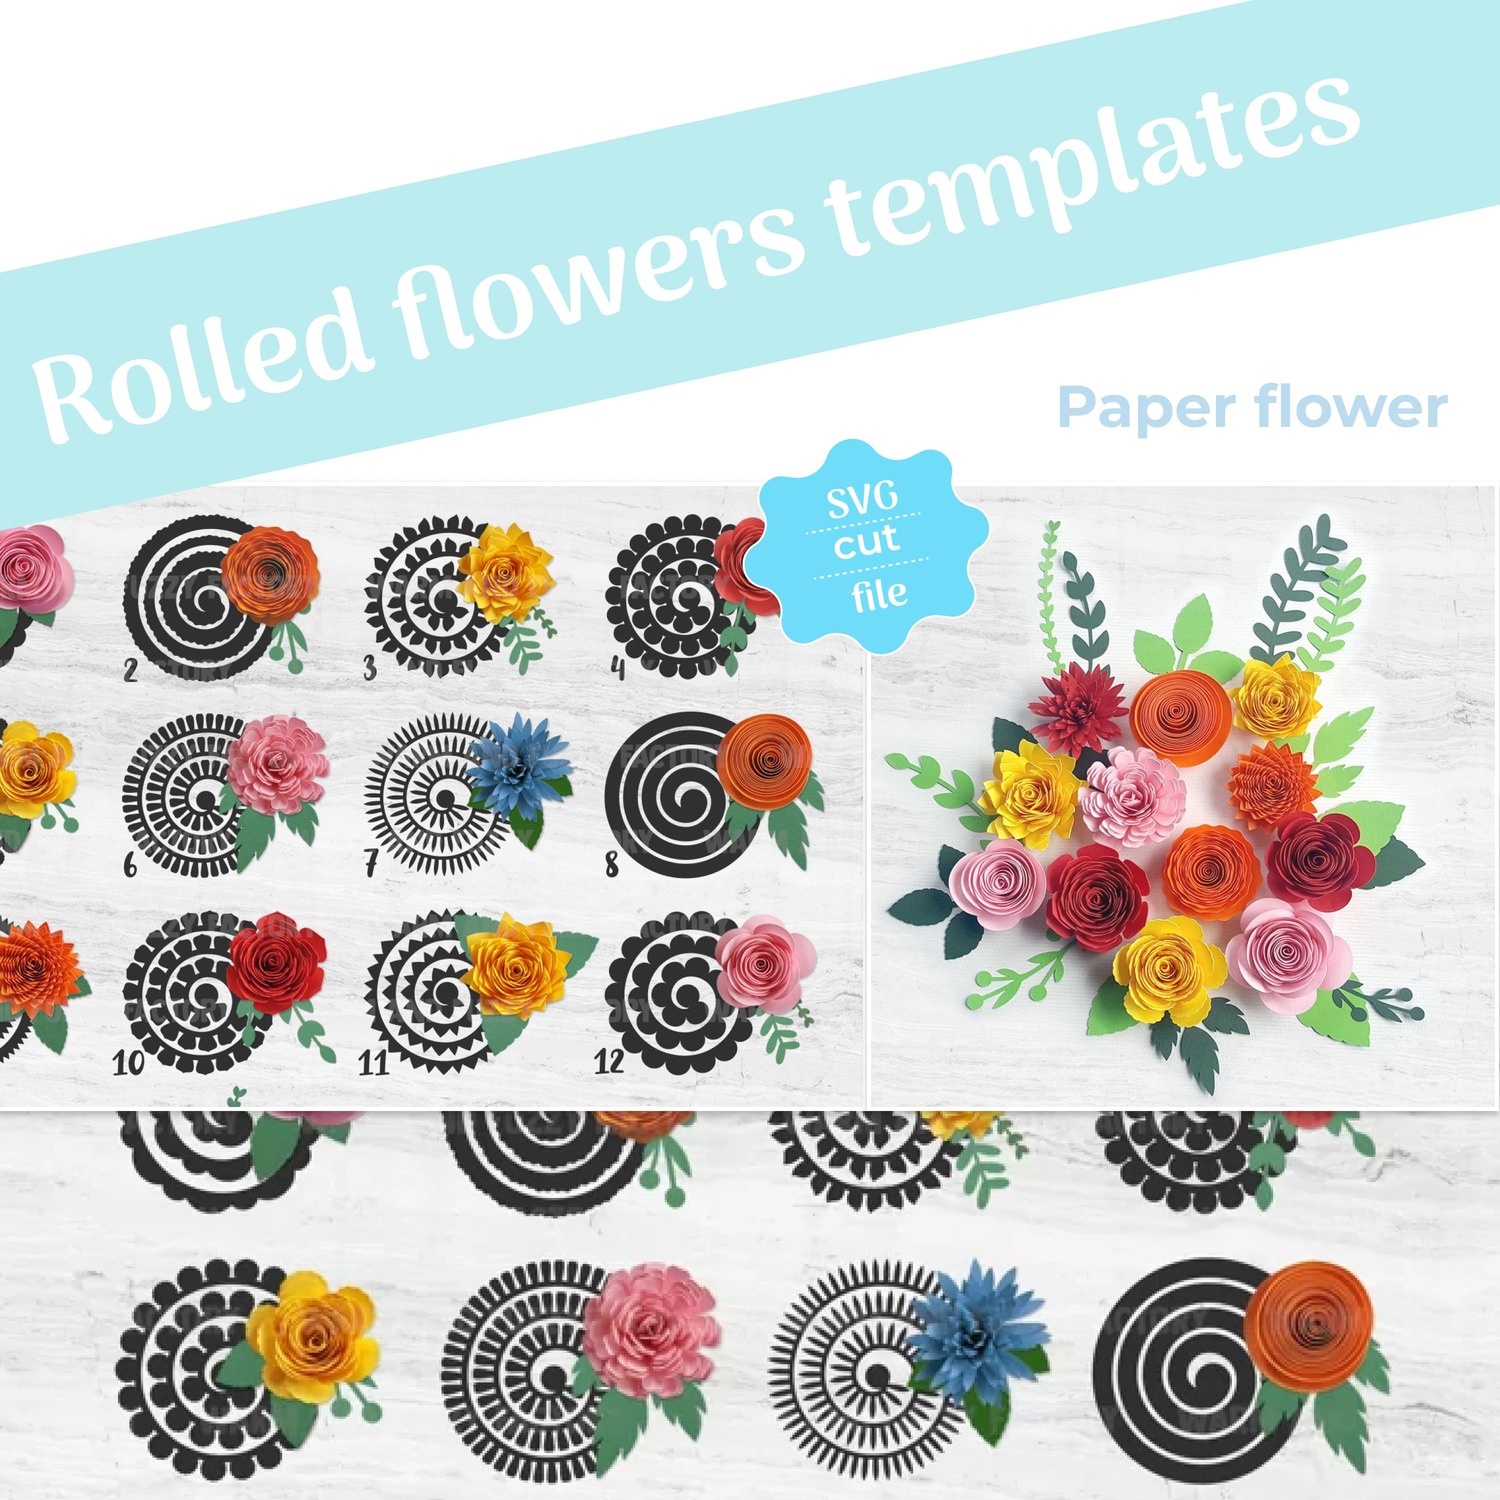 Rolled flower svg, Paper flower template | SVG Cut File cover image.